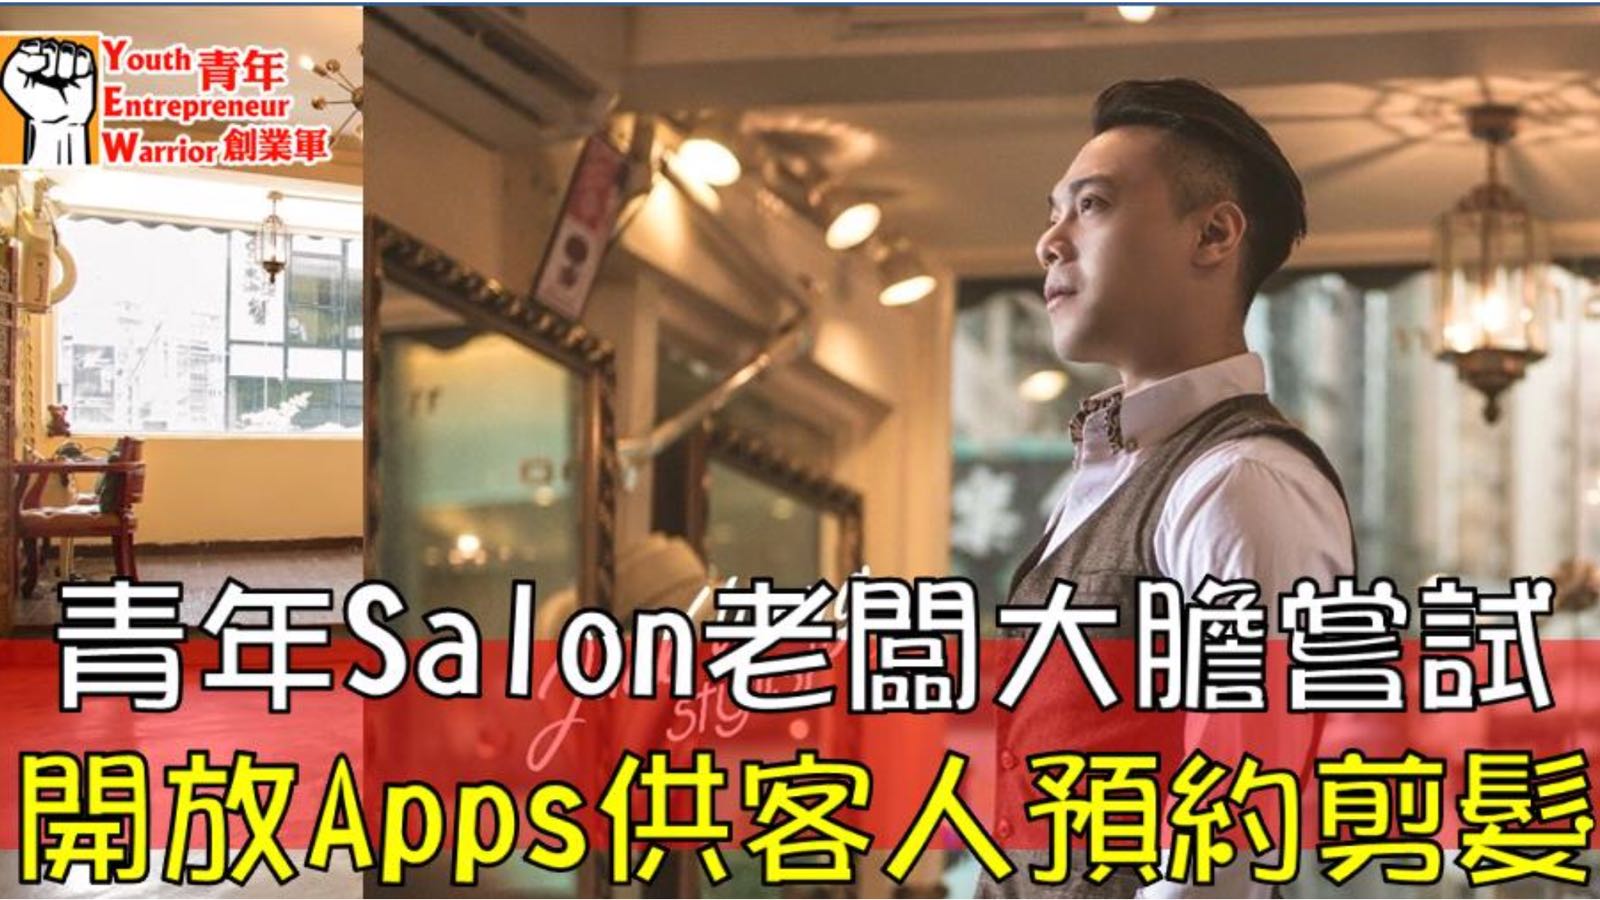 Hair Papillon  HK Hair Salon - Media Coverage reference: 青年Salon老闆大膽嘗試 開放Apps供客人預約剪髮